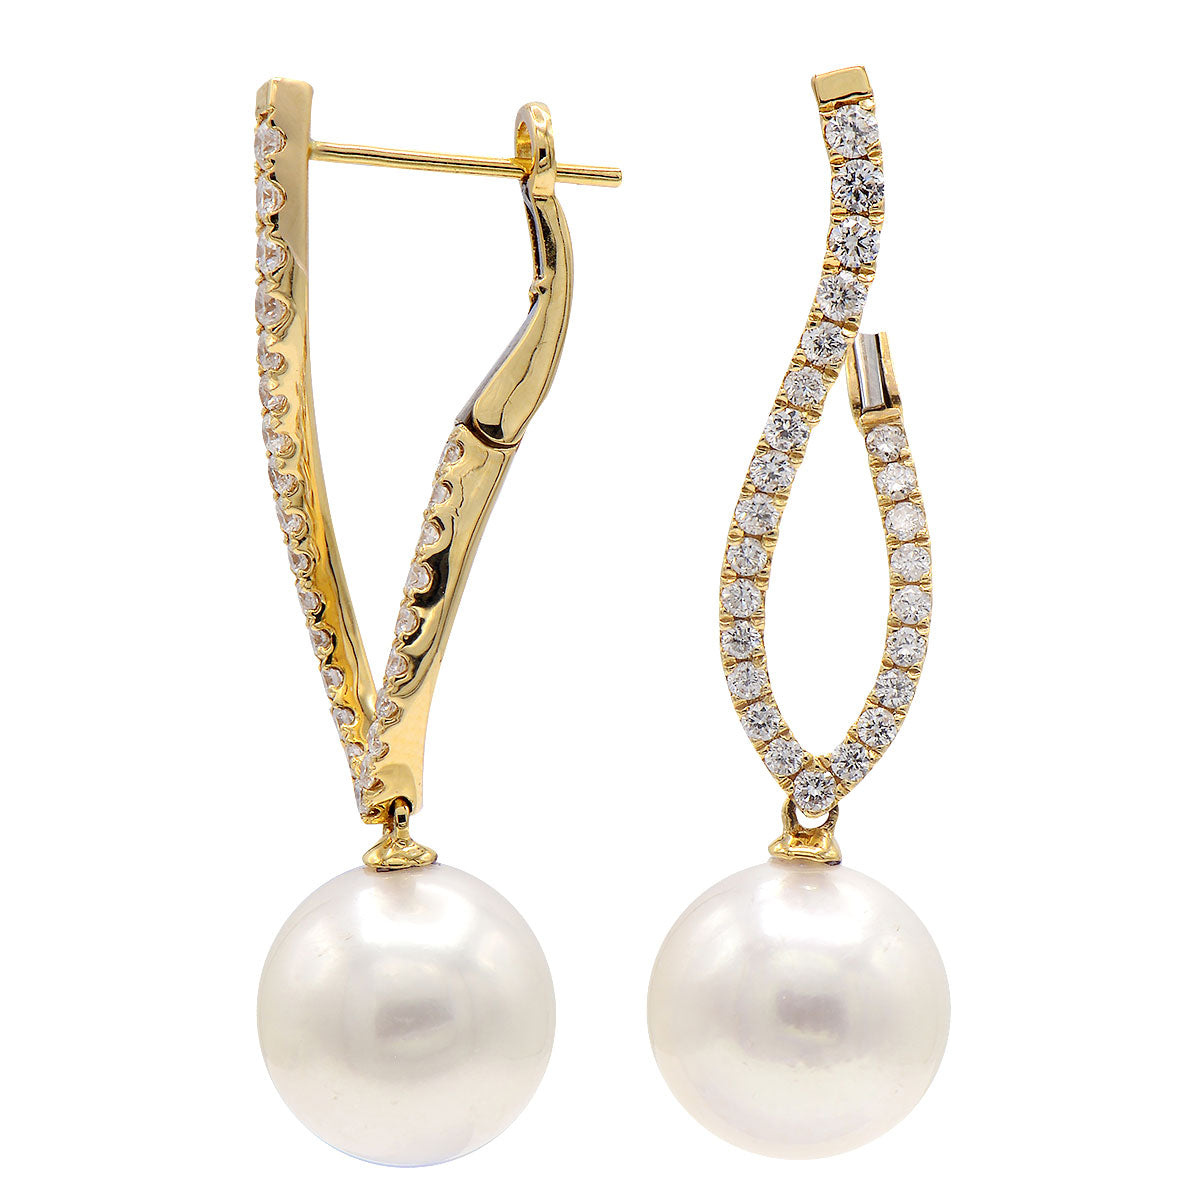 18KY White South Sea Pearl Earrings, 10-11mm